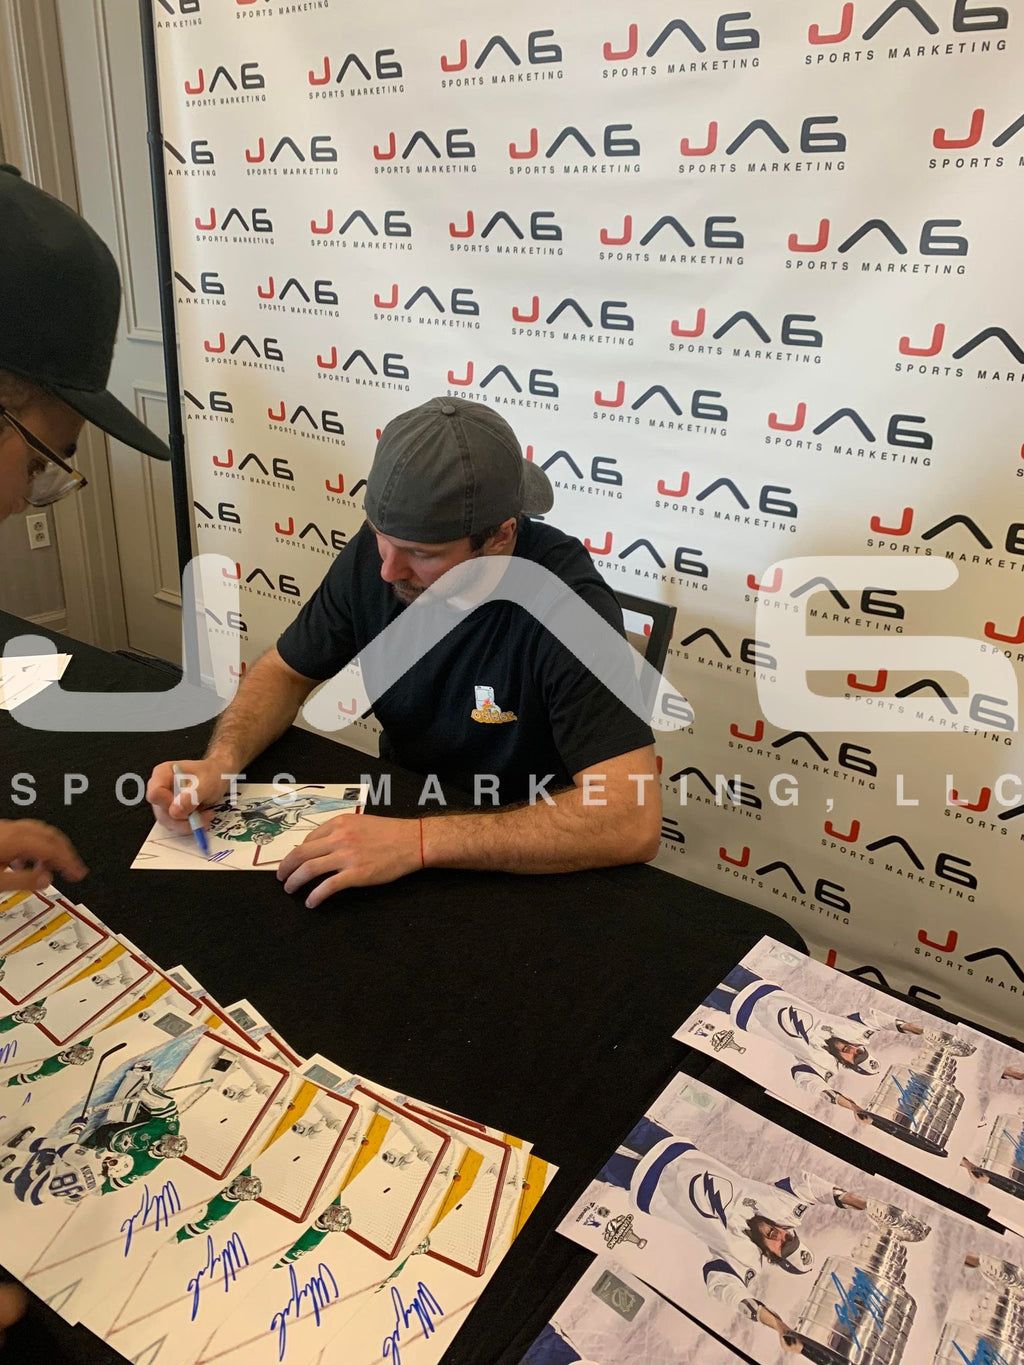 Nikita Kucherov autographed signed 8x10 photo NHL Tampa Bay Lightning JSA COA